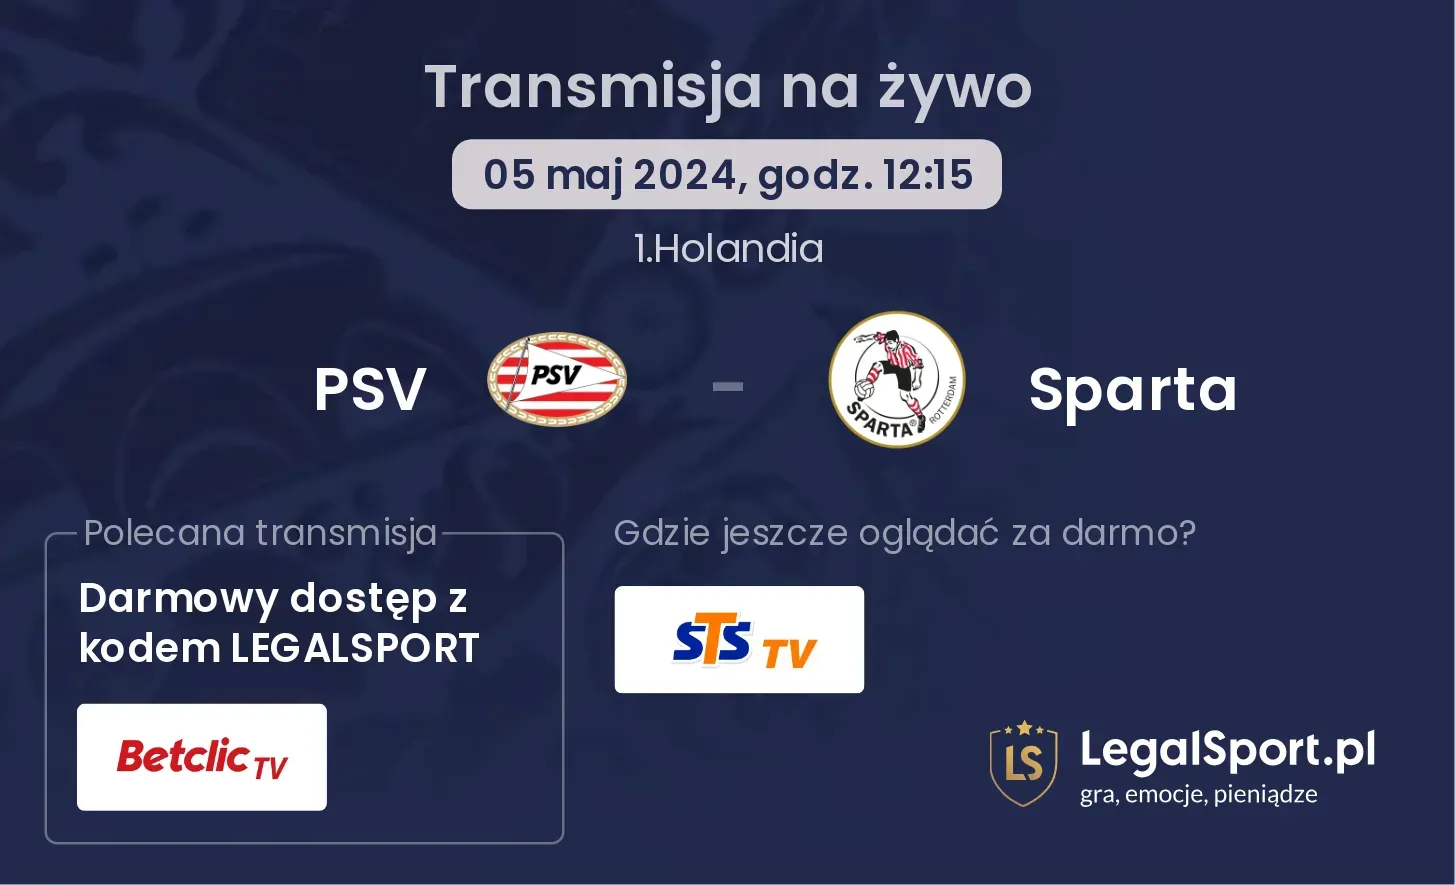 PSV - Sparta transmisja na żywo